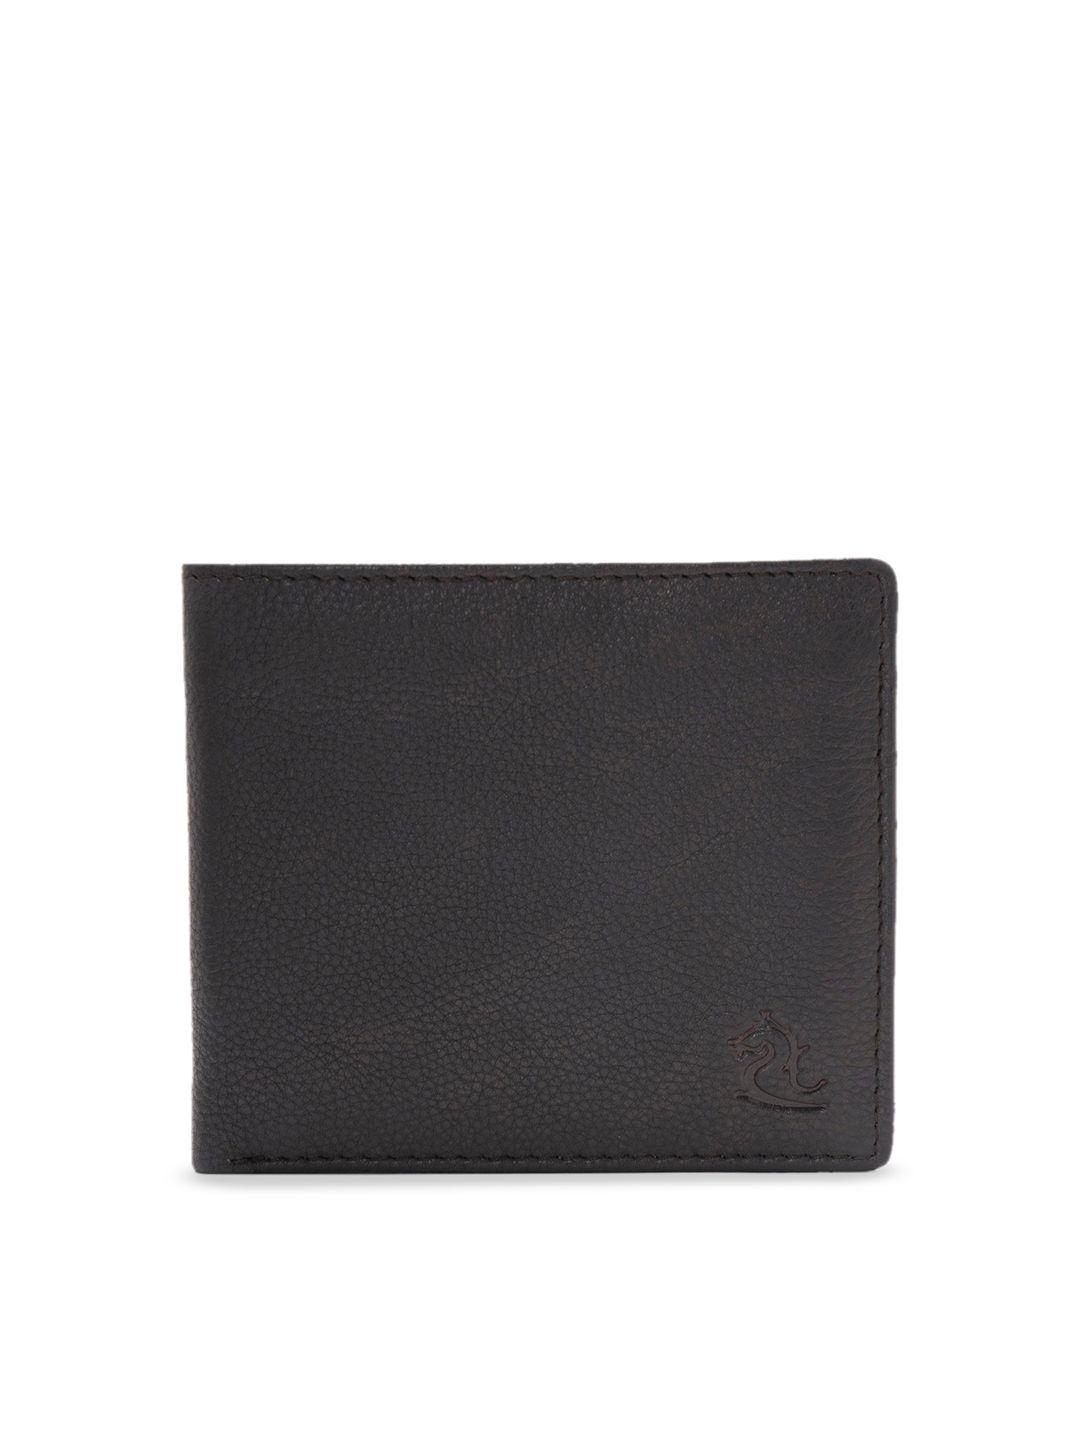 kara men brown textured leather two fold wallet